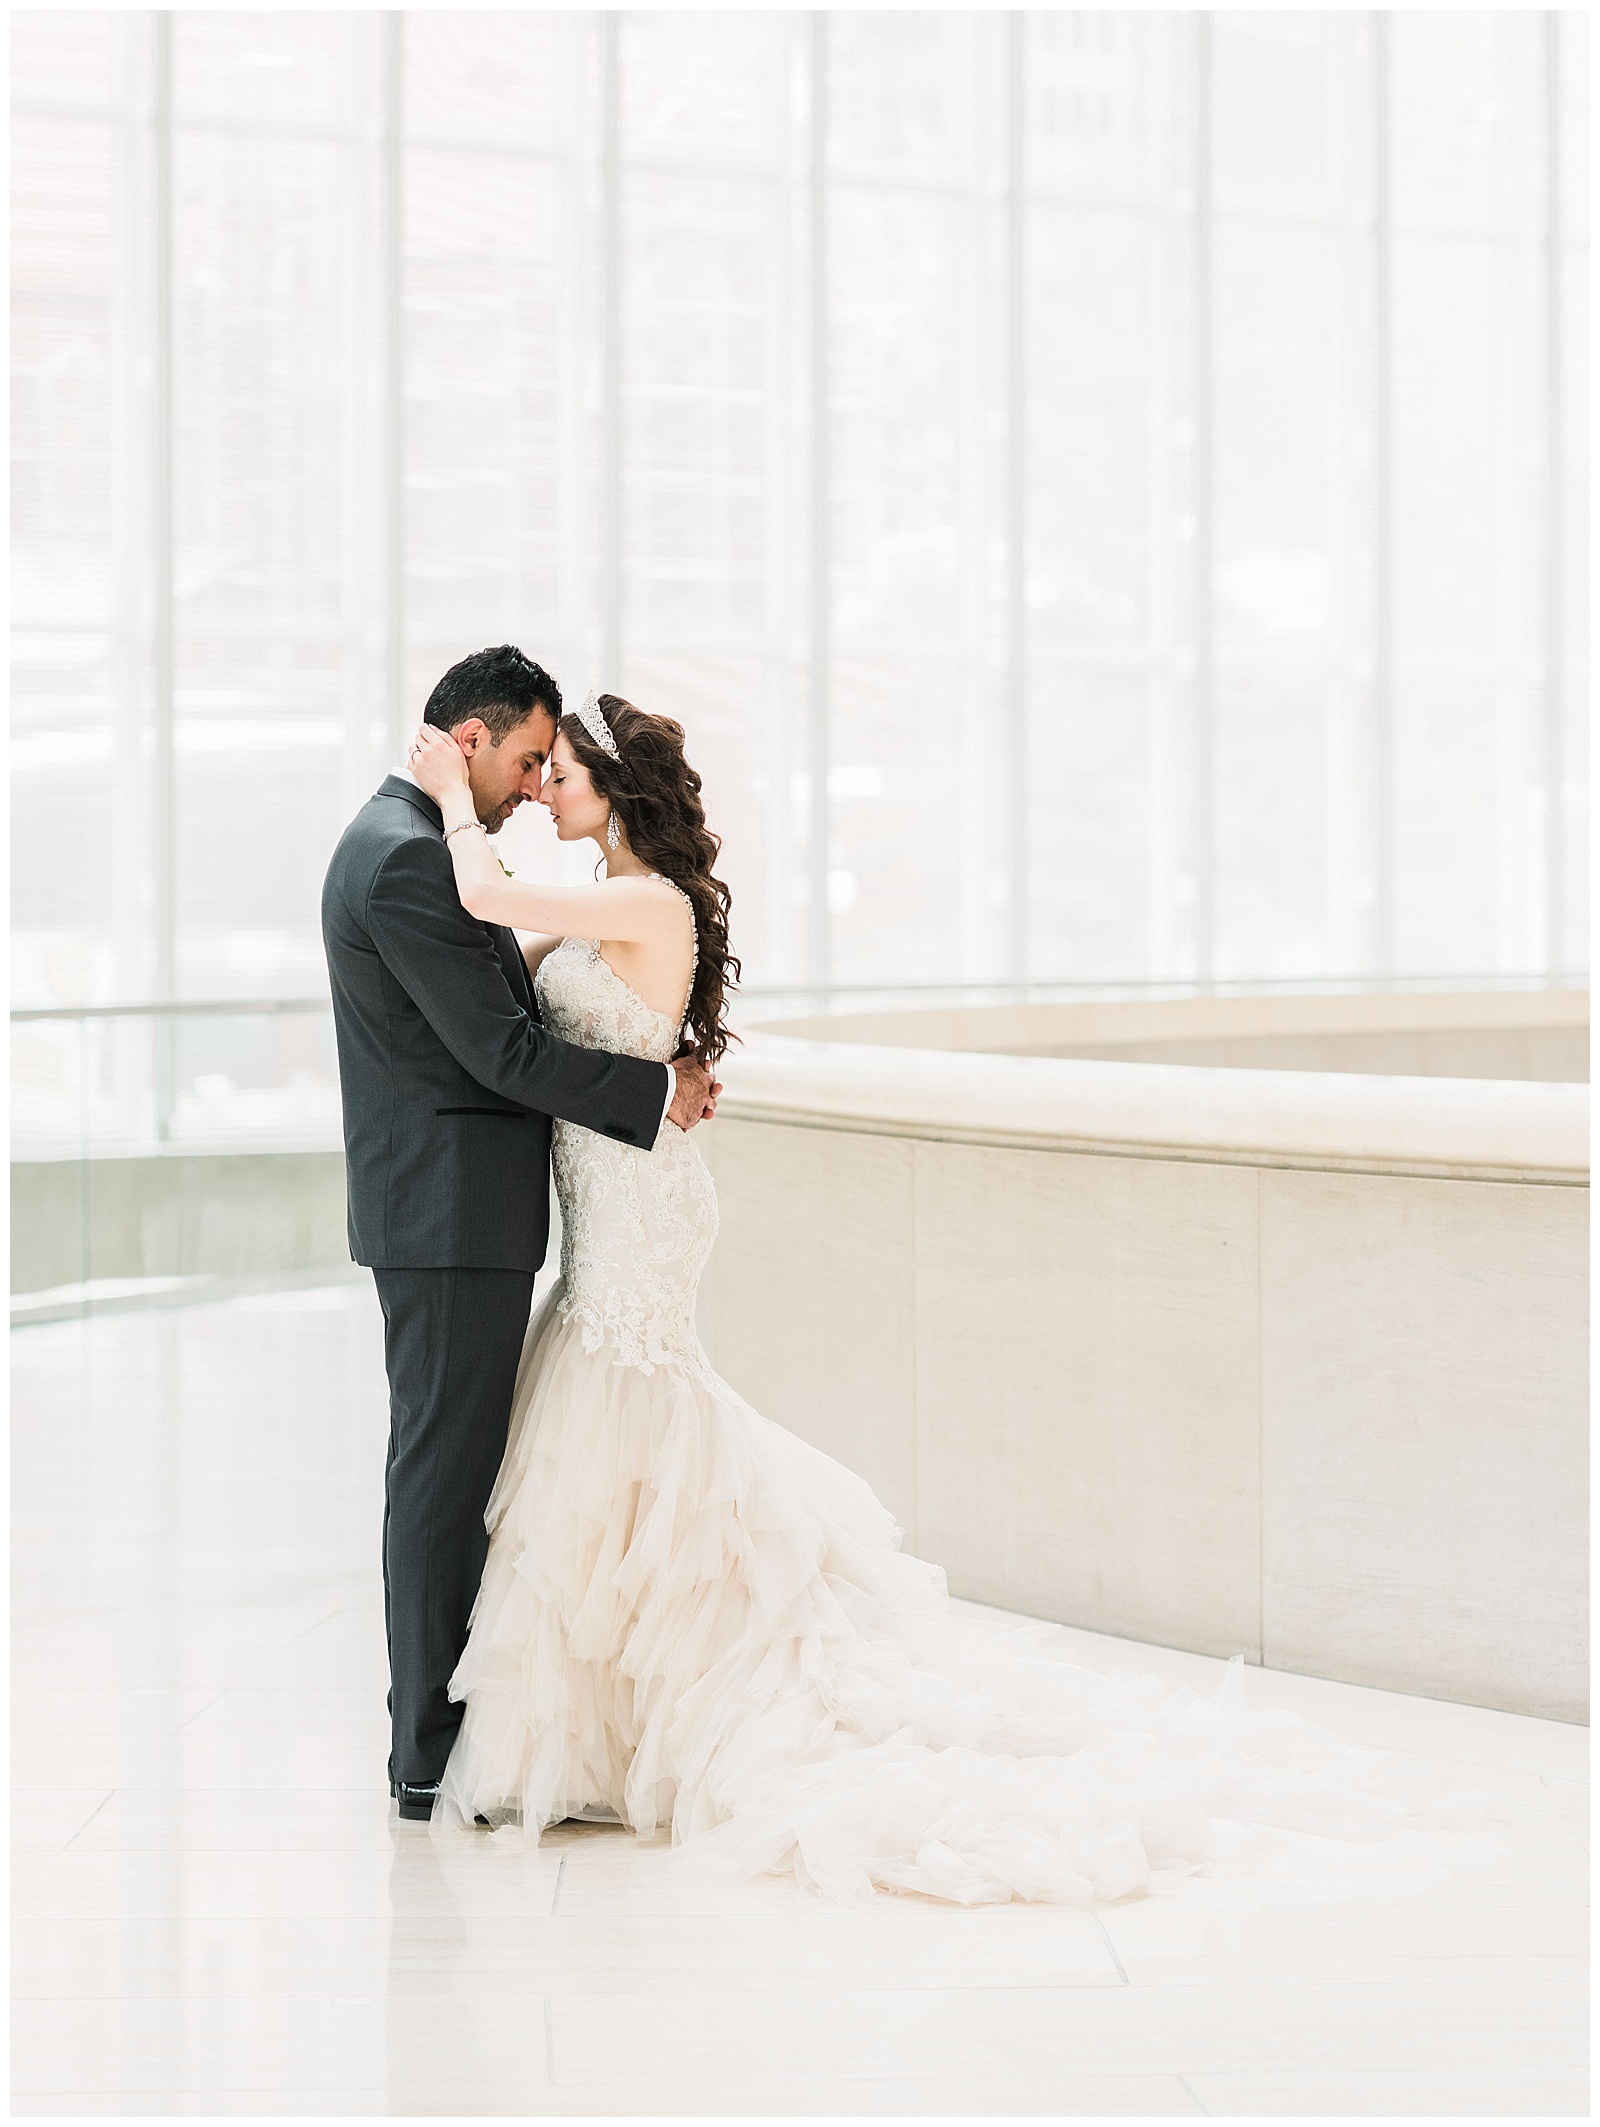 Meyerson Symphony Center Dallas Wedding Portraits 